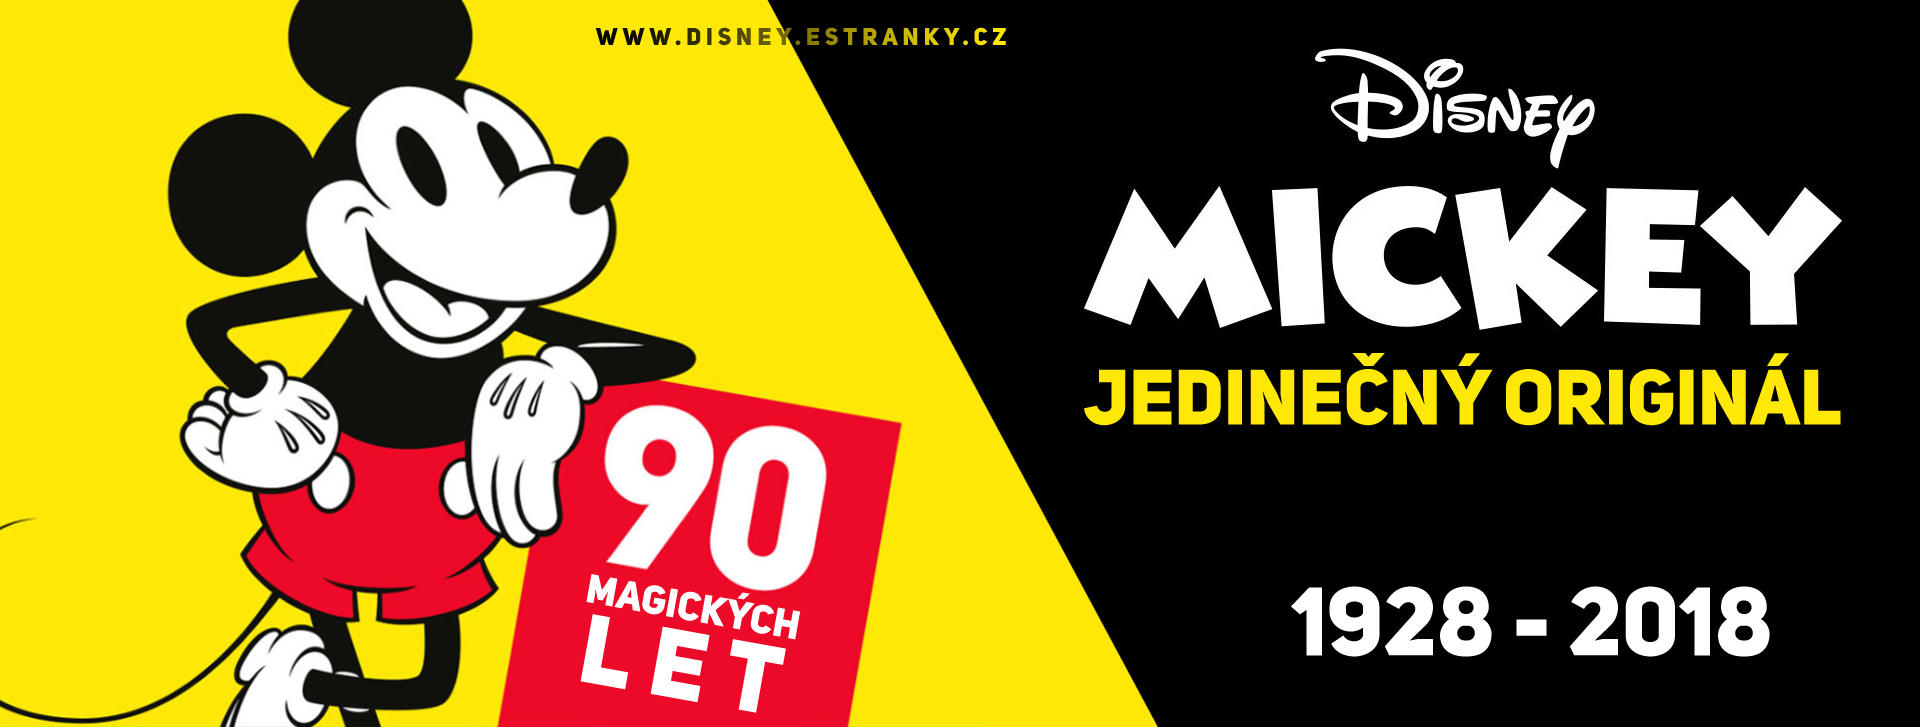 Mickey 90 1928 - 2018 Disney